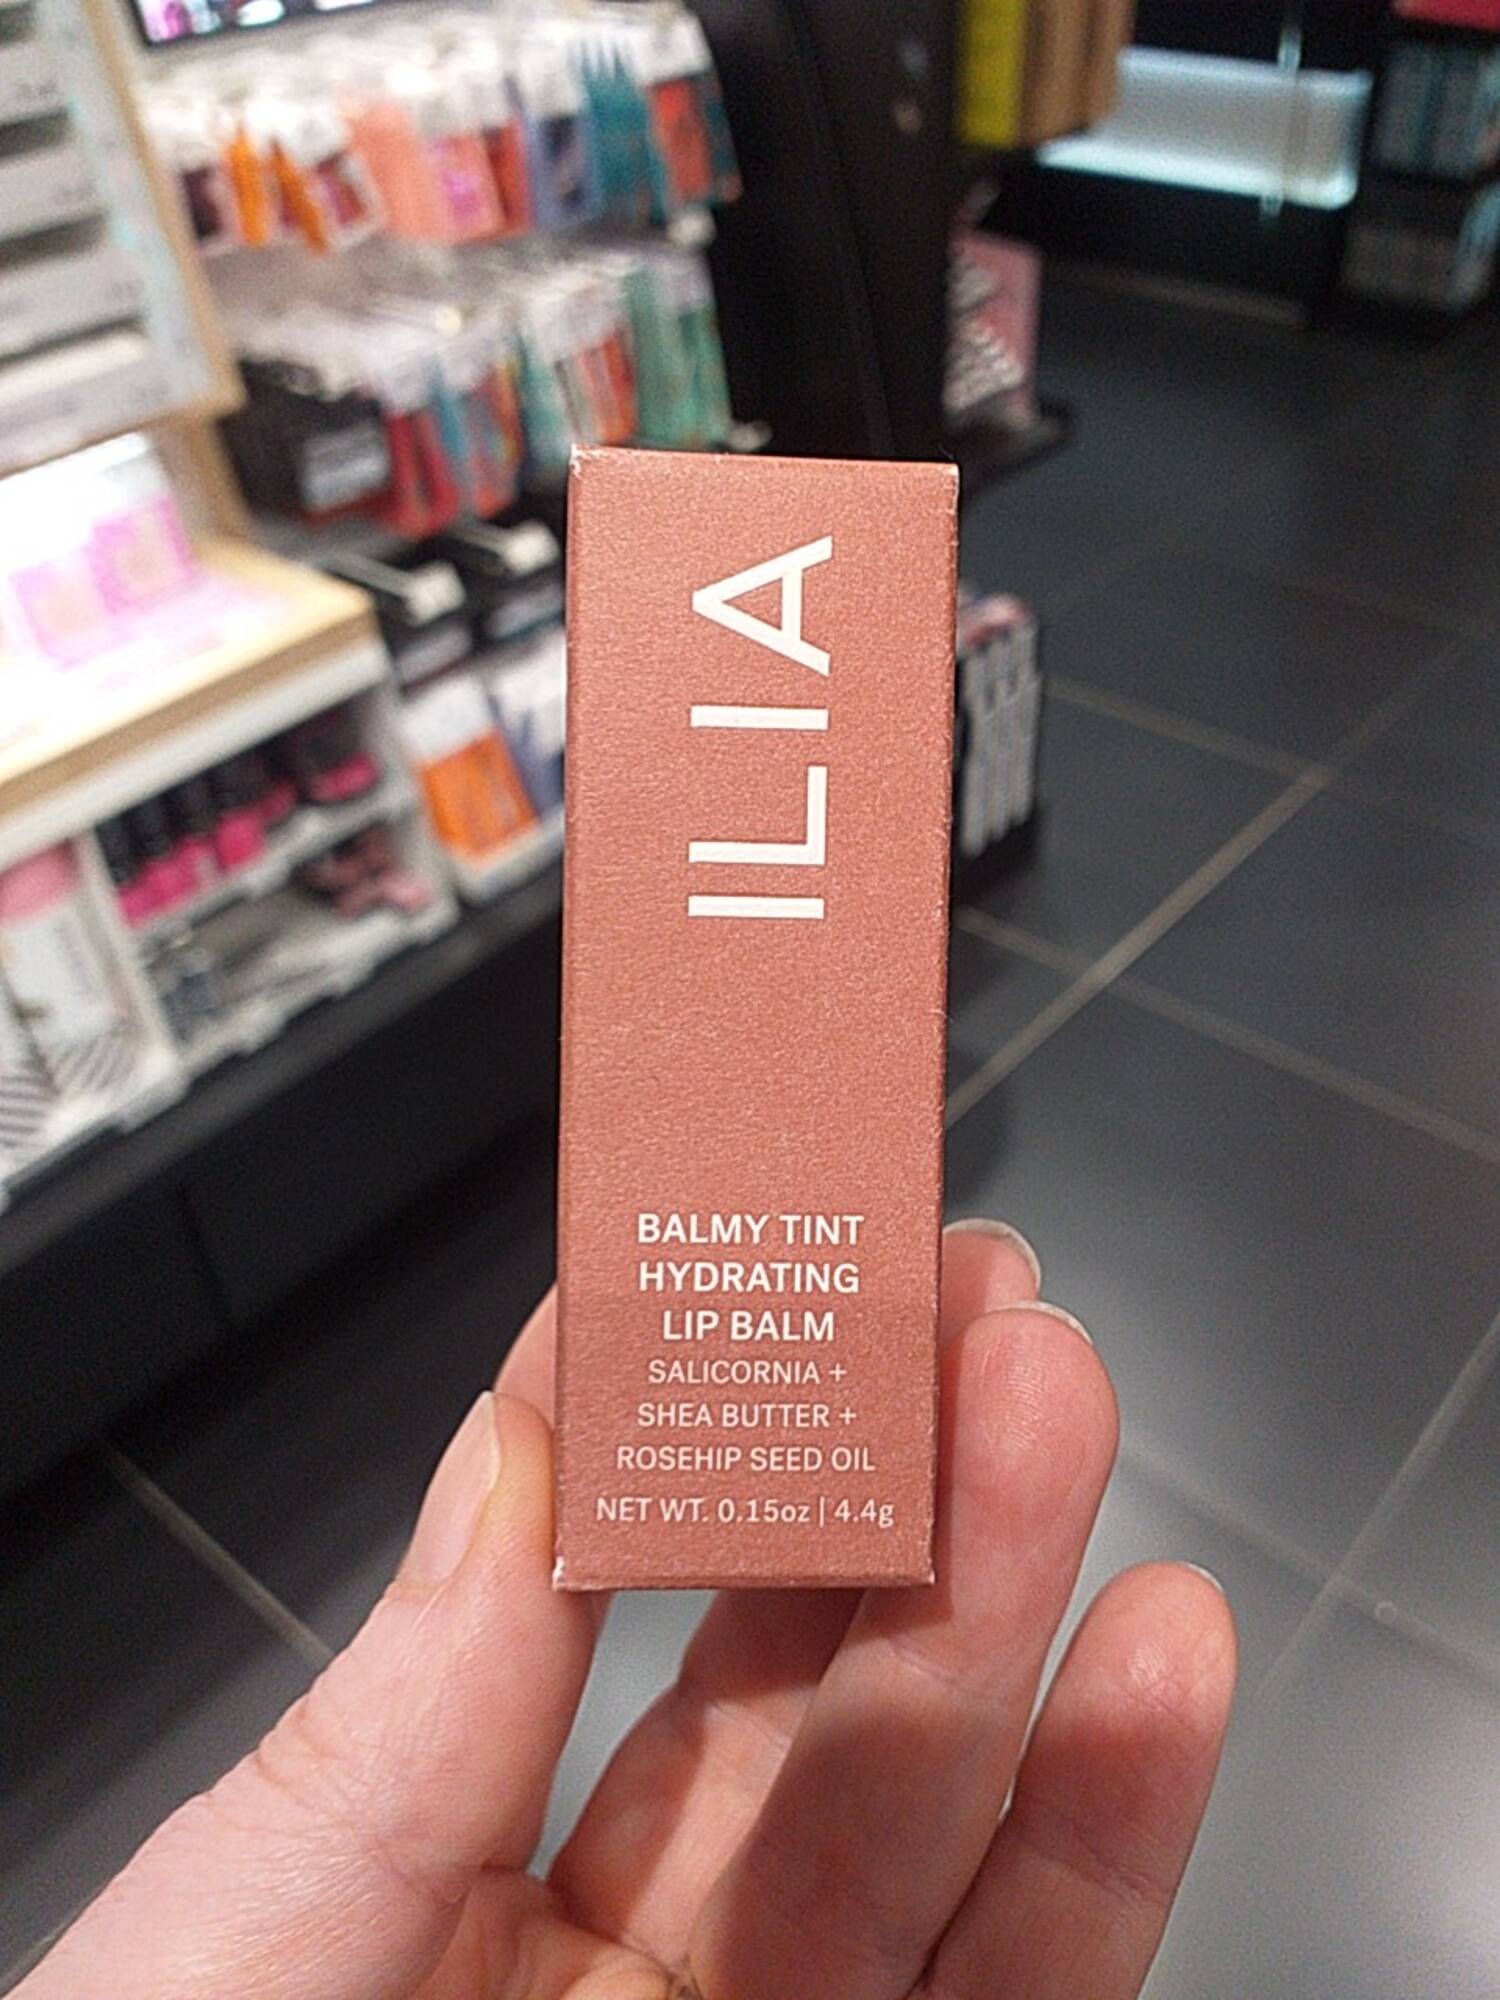 ILIA - Balmy tint hydrating lip balm 